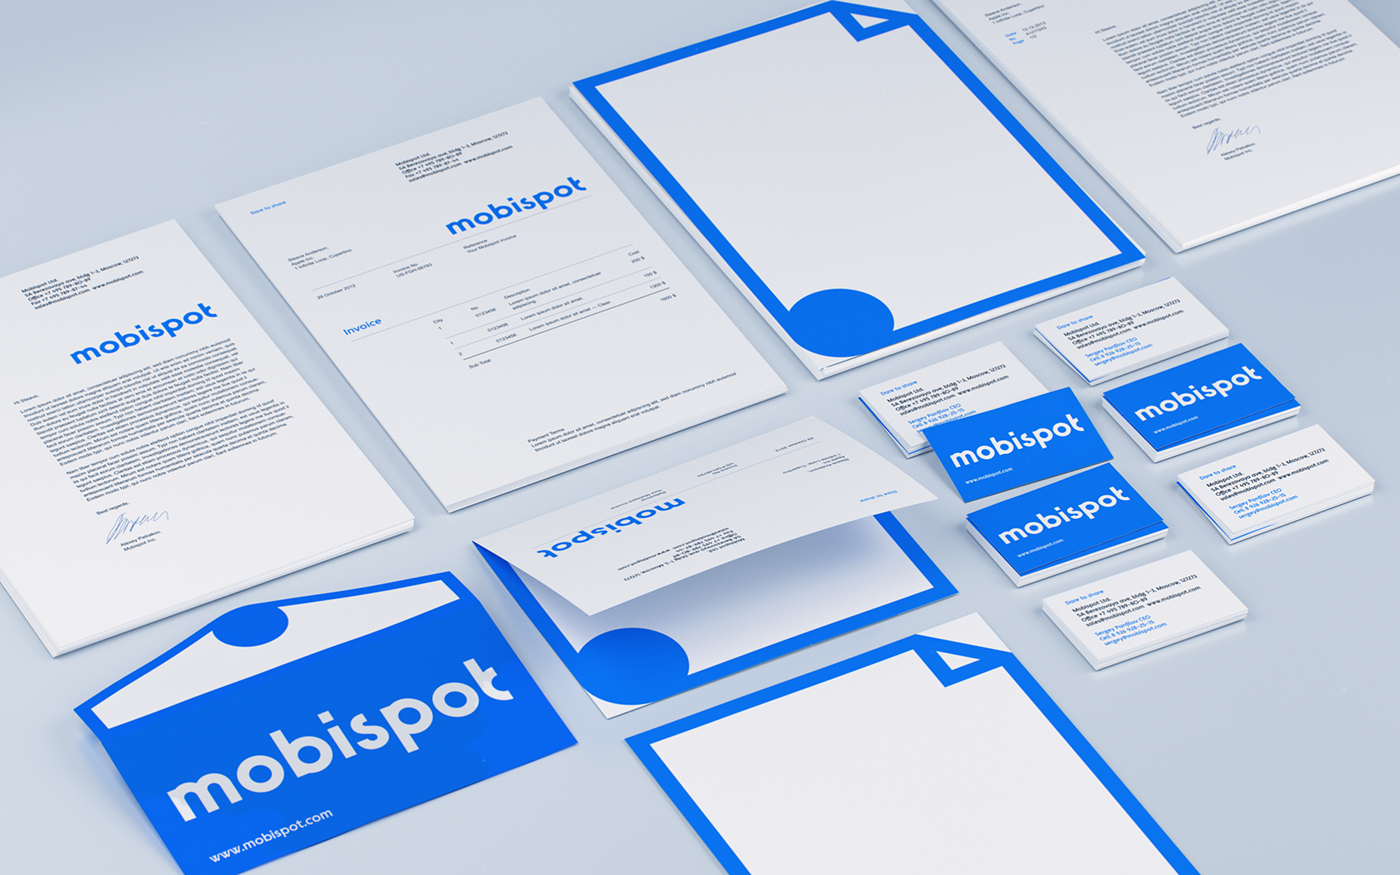 NFC mobispot design industrial identity singapore newyork Spot Spots graphic icons